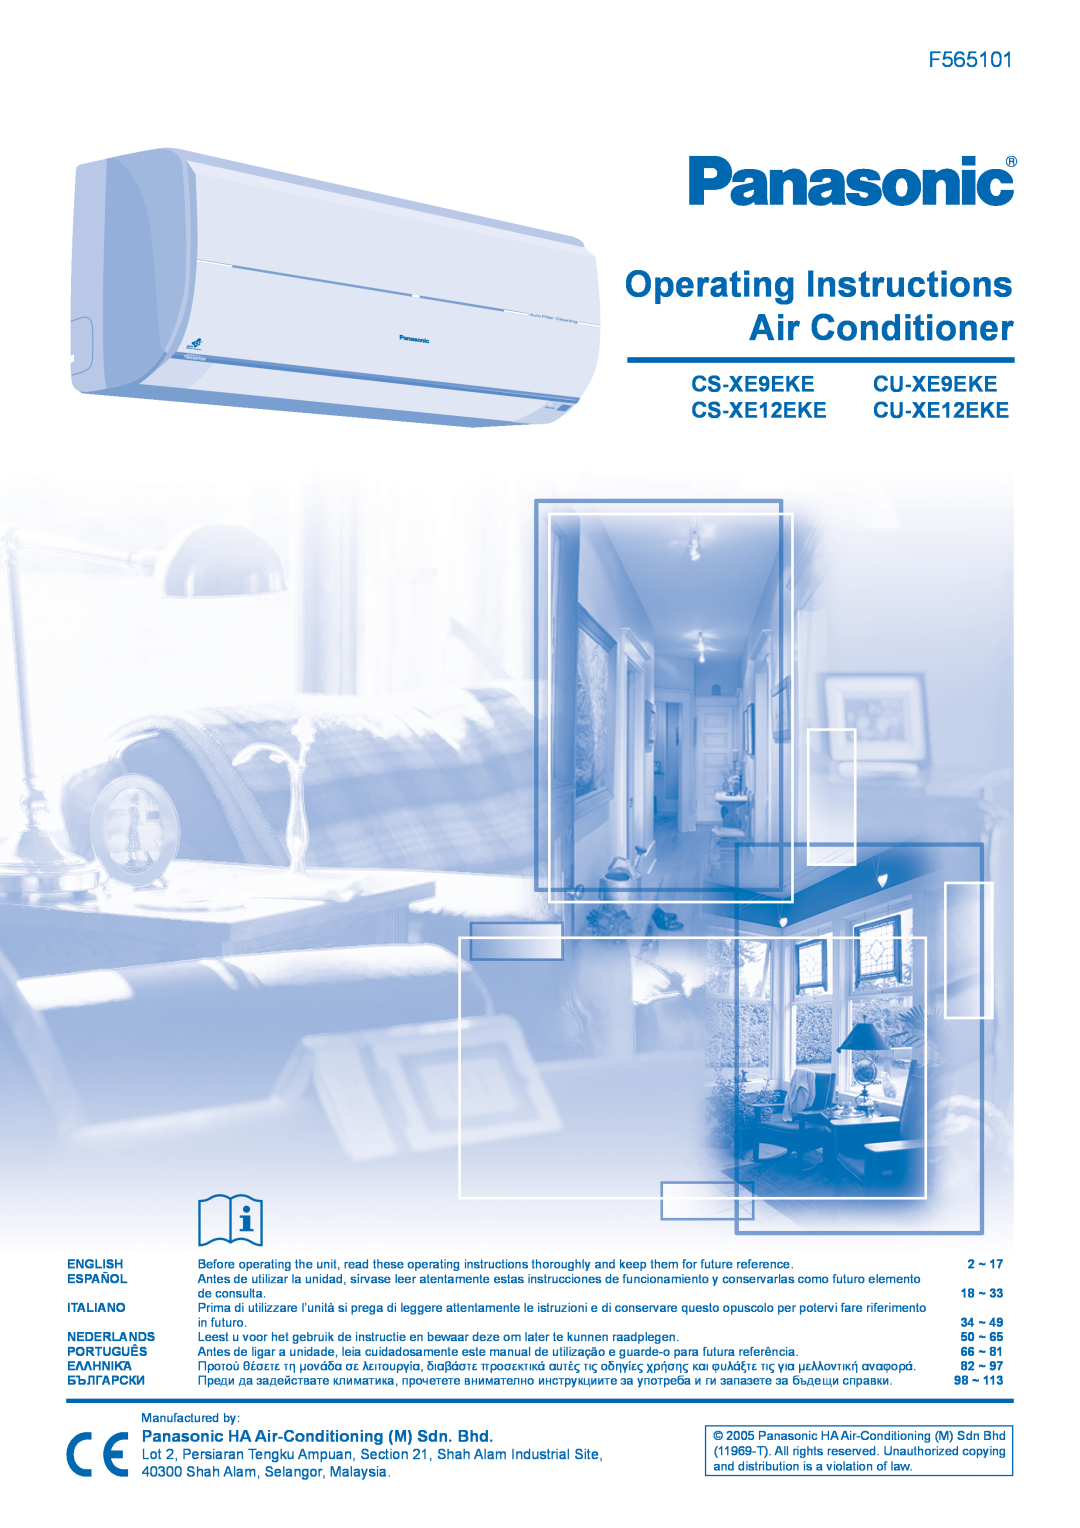 Panasonic manual Operating Instructions Air Conditioner, F565101, CS-XE9EKE CU-XE9EKE CS-XE12EKE CU-XE12EKE 